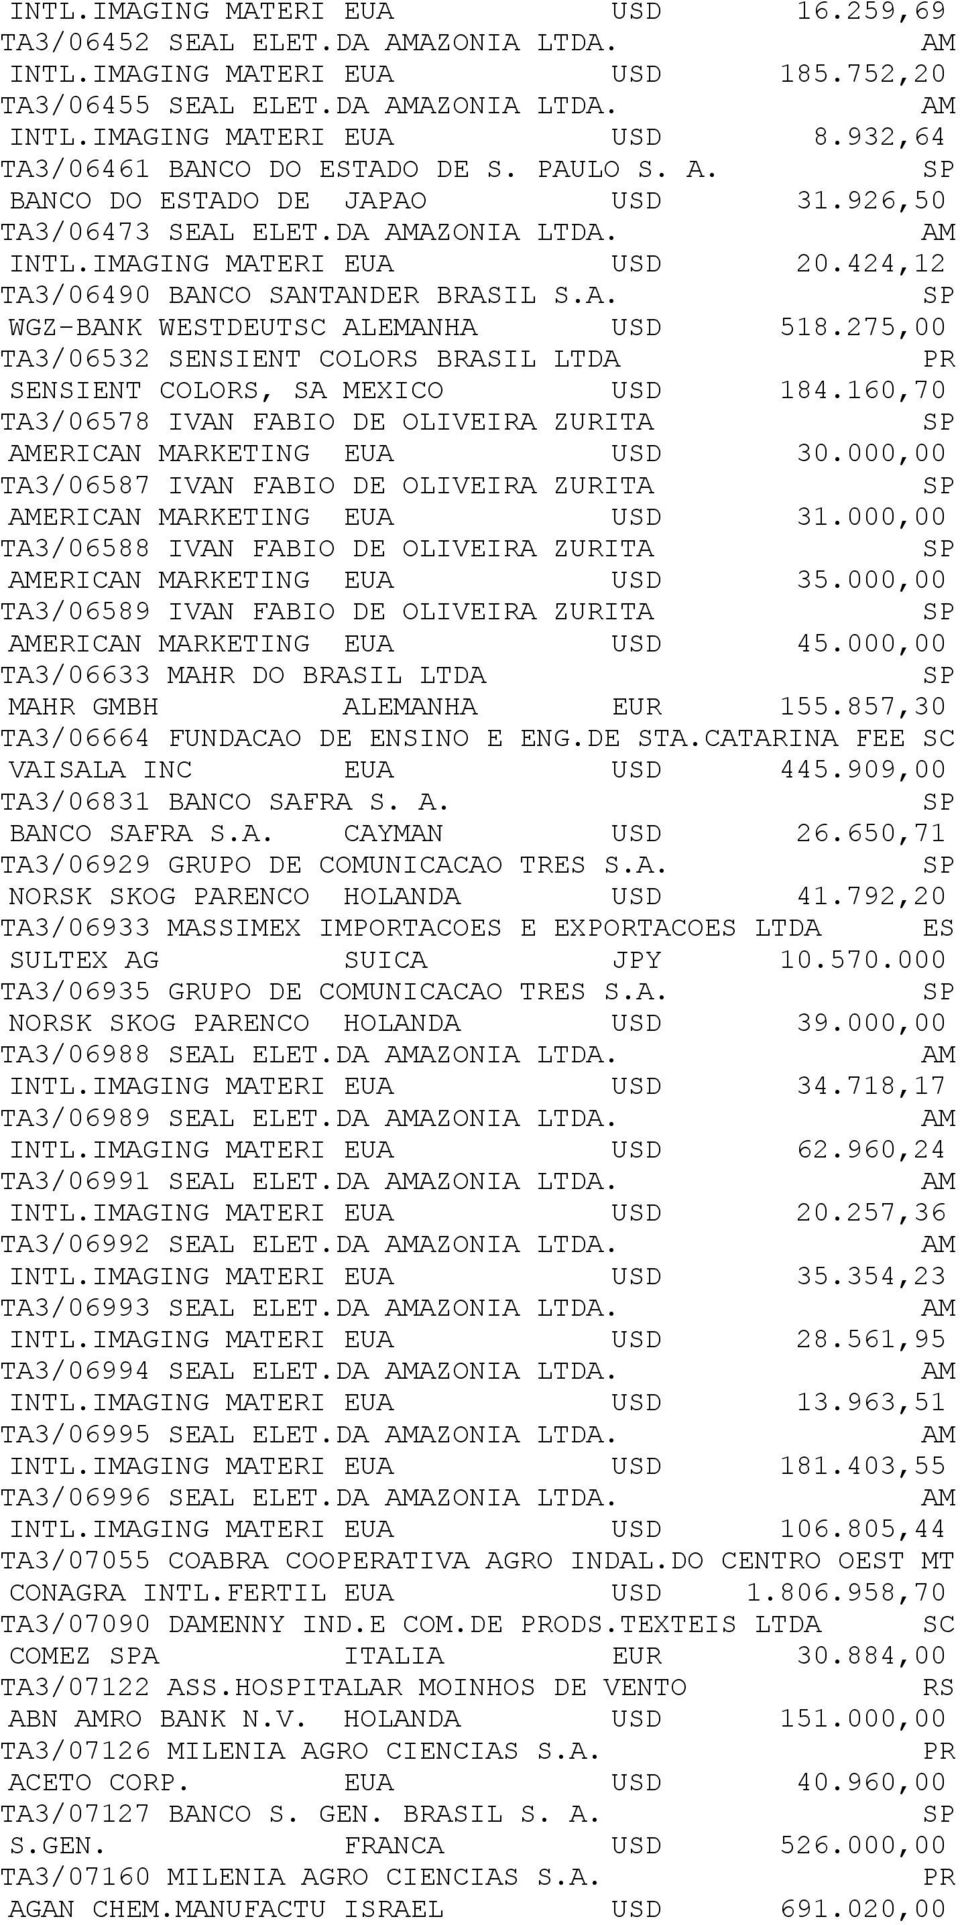 275,00 TA3/06532 SENSIENT COLO BRASIL LTDA SENSIENT COLO, SA MEXICO USD 184.160,70 TA3/06578 IVAN FABIO DE OLIVEIRA ZURITA ERICAN MARKETING EUA USD 30.